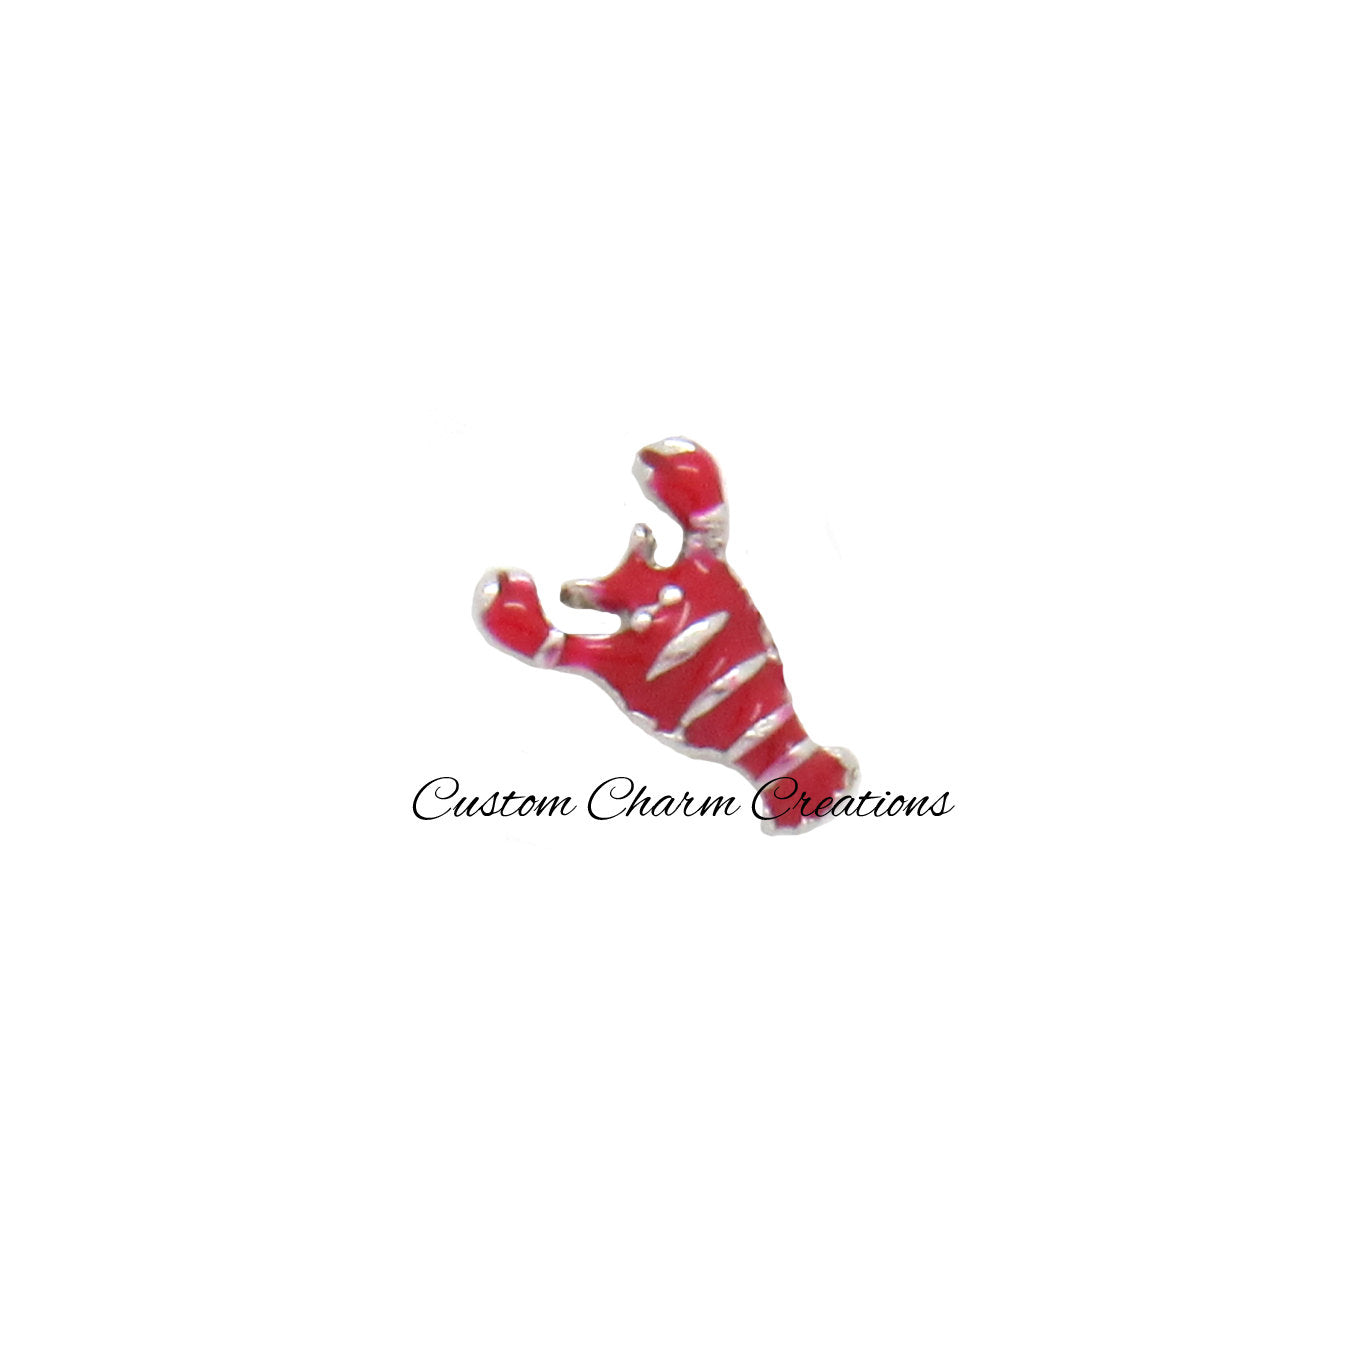 Red Lobster Floating Locket Charm - Custom Charm Creations